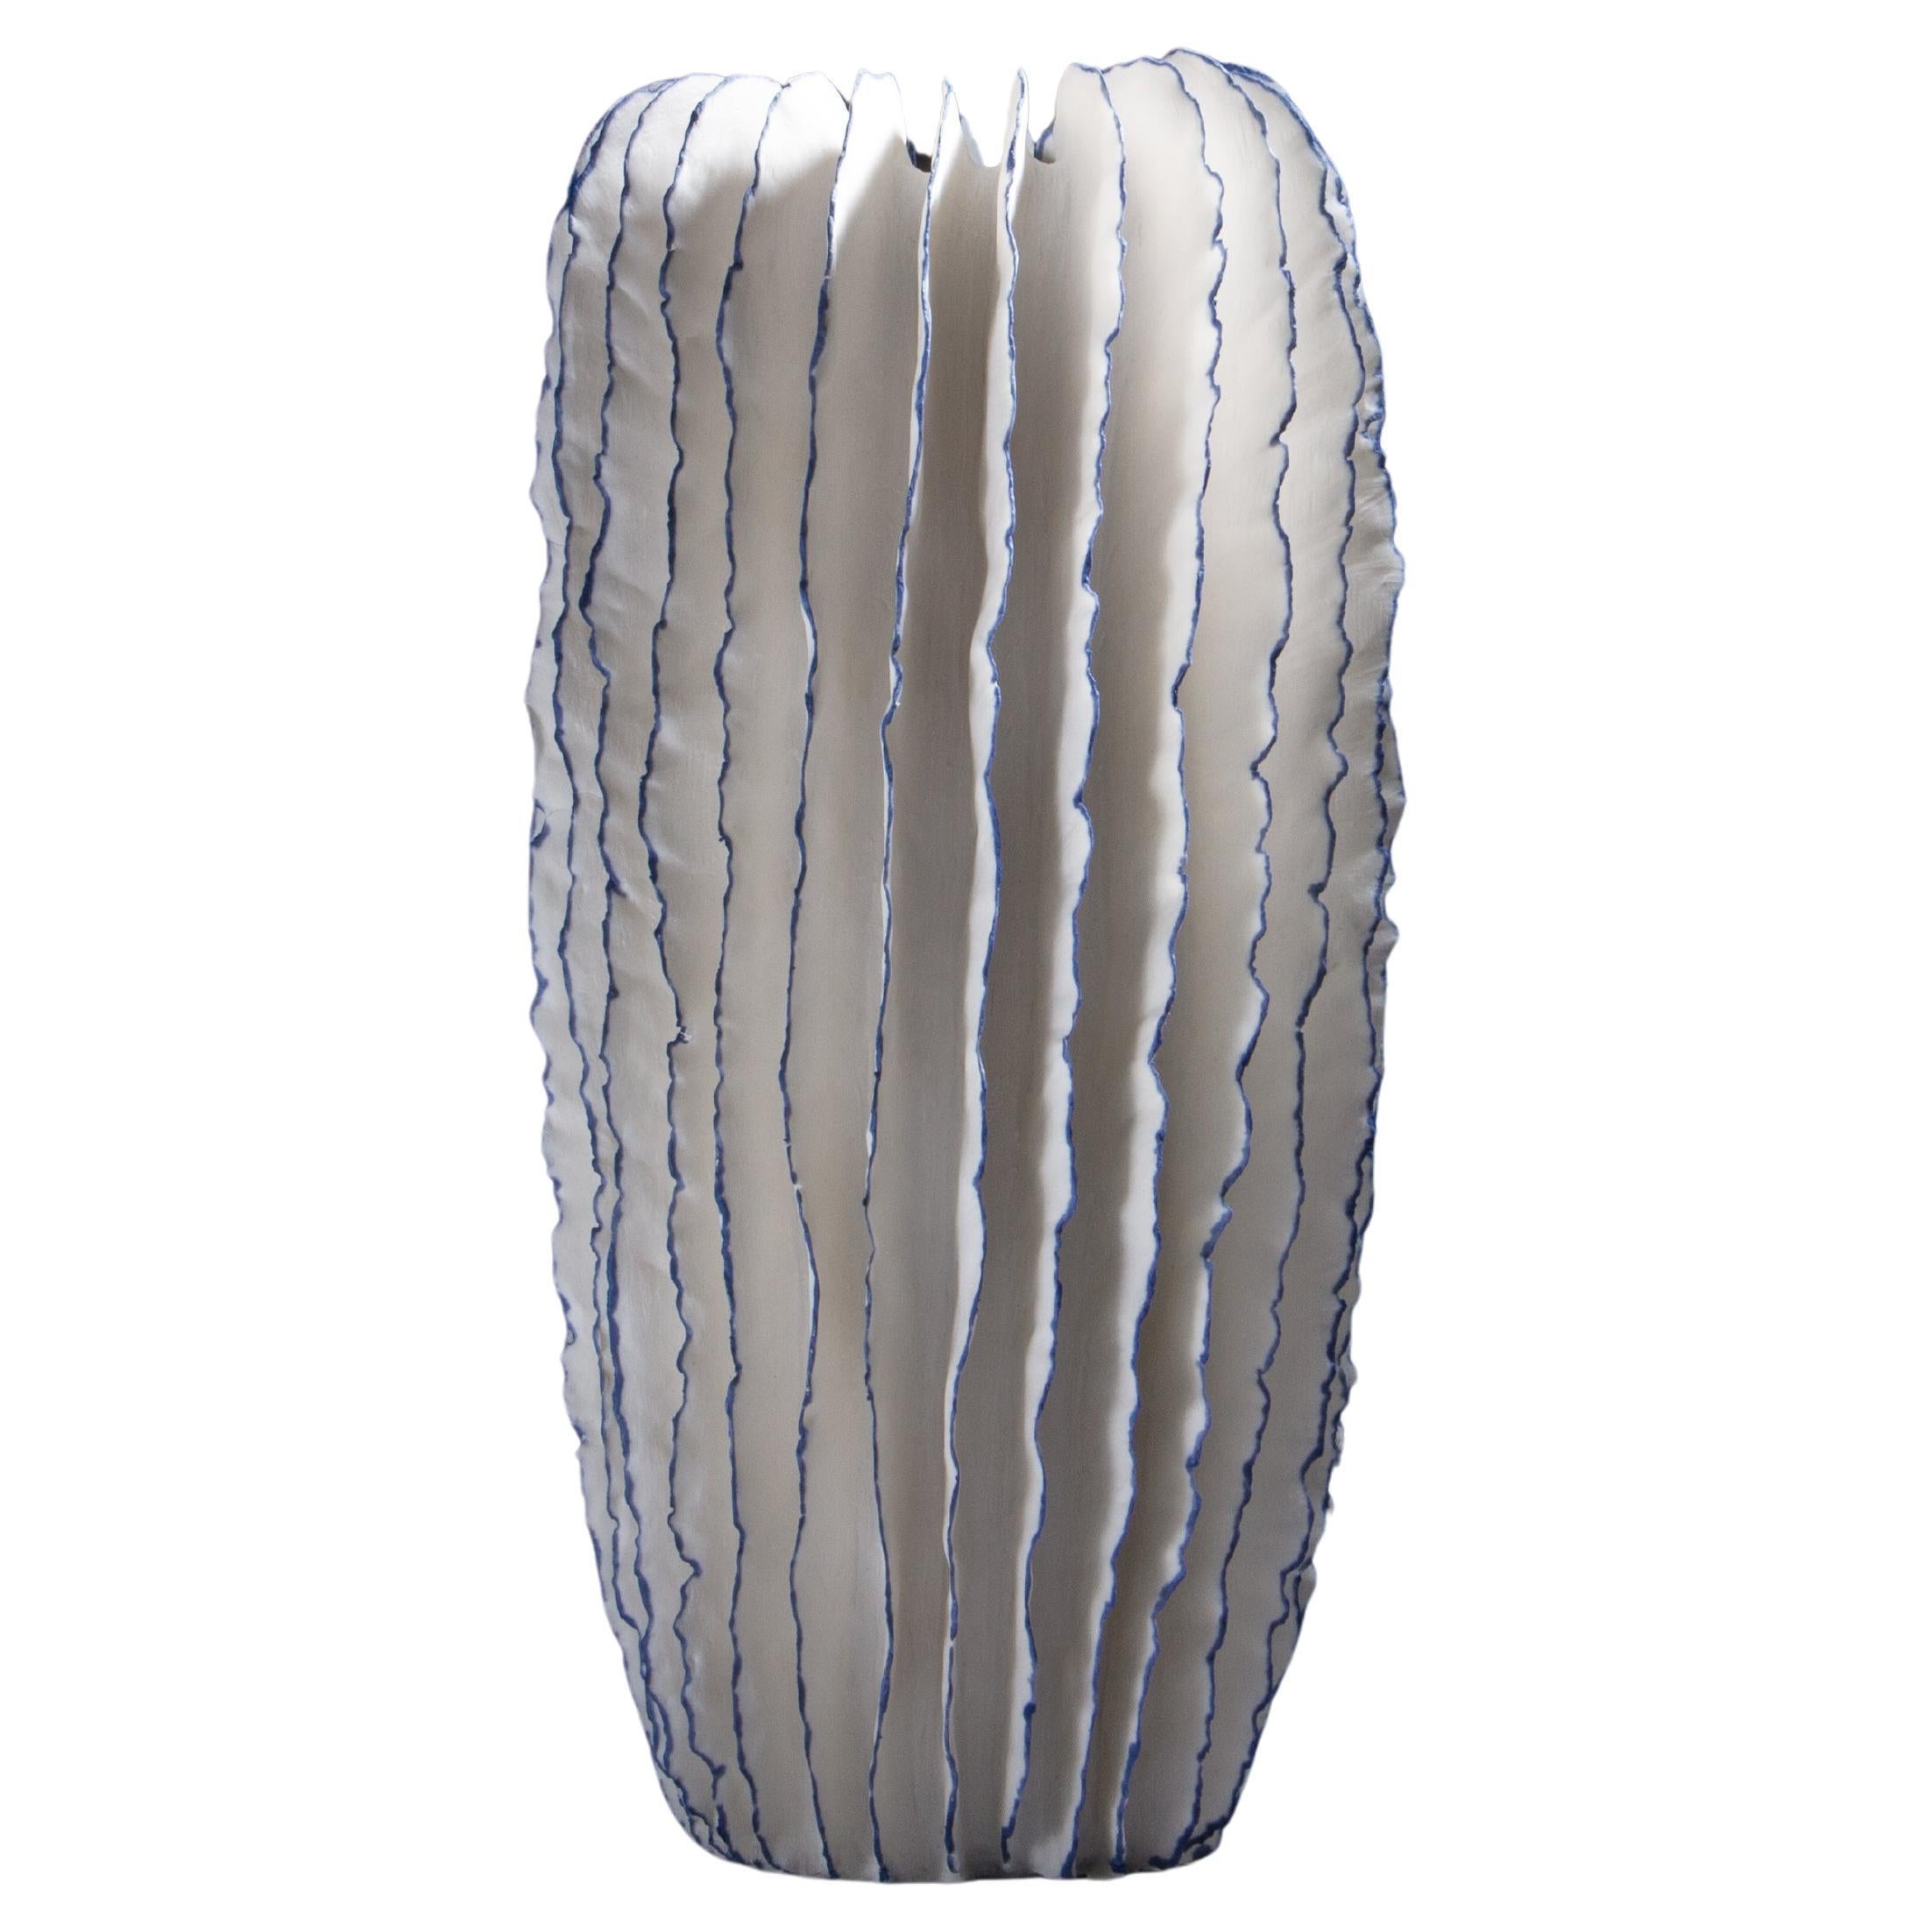 Ruffled Blue and White Cactus-like Ceramic Sculpture, Sandra Davolio For Sale